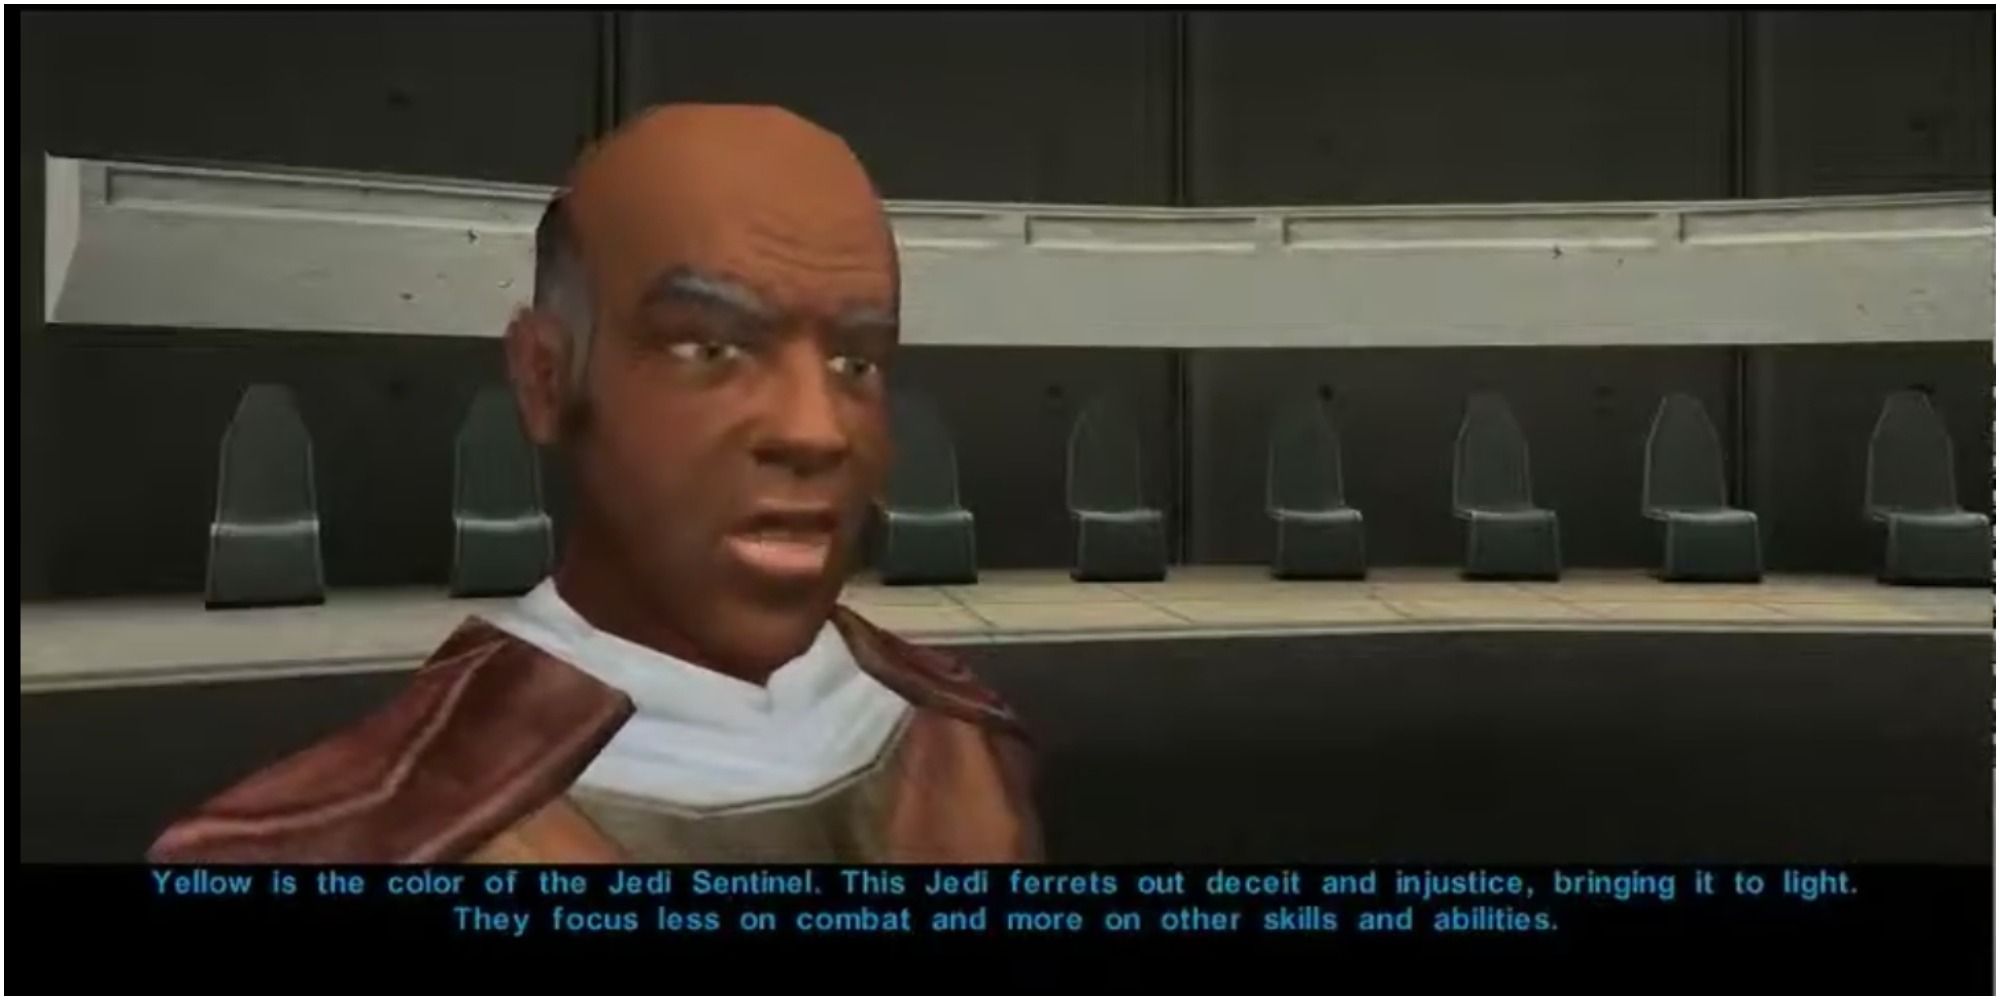 Jedi council member explaining the Jedi Sentinel role